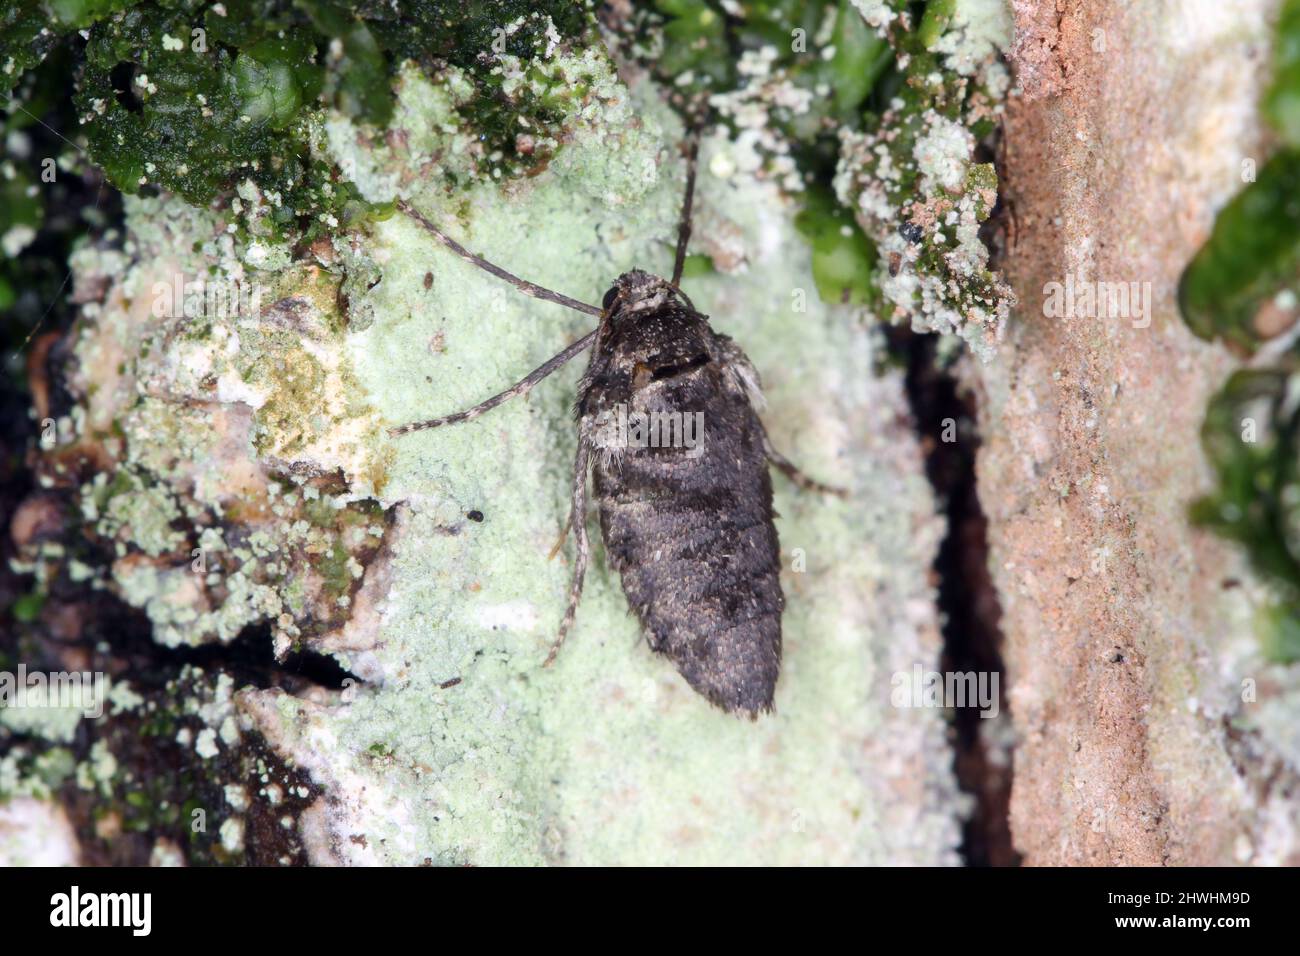 Winter Moth - Operophtera brumata. It is a moth of the family Geometridae. Short-winged female on the bark of a tree. Stock Photo